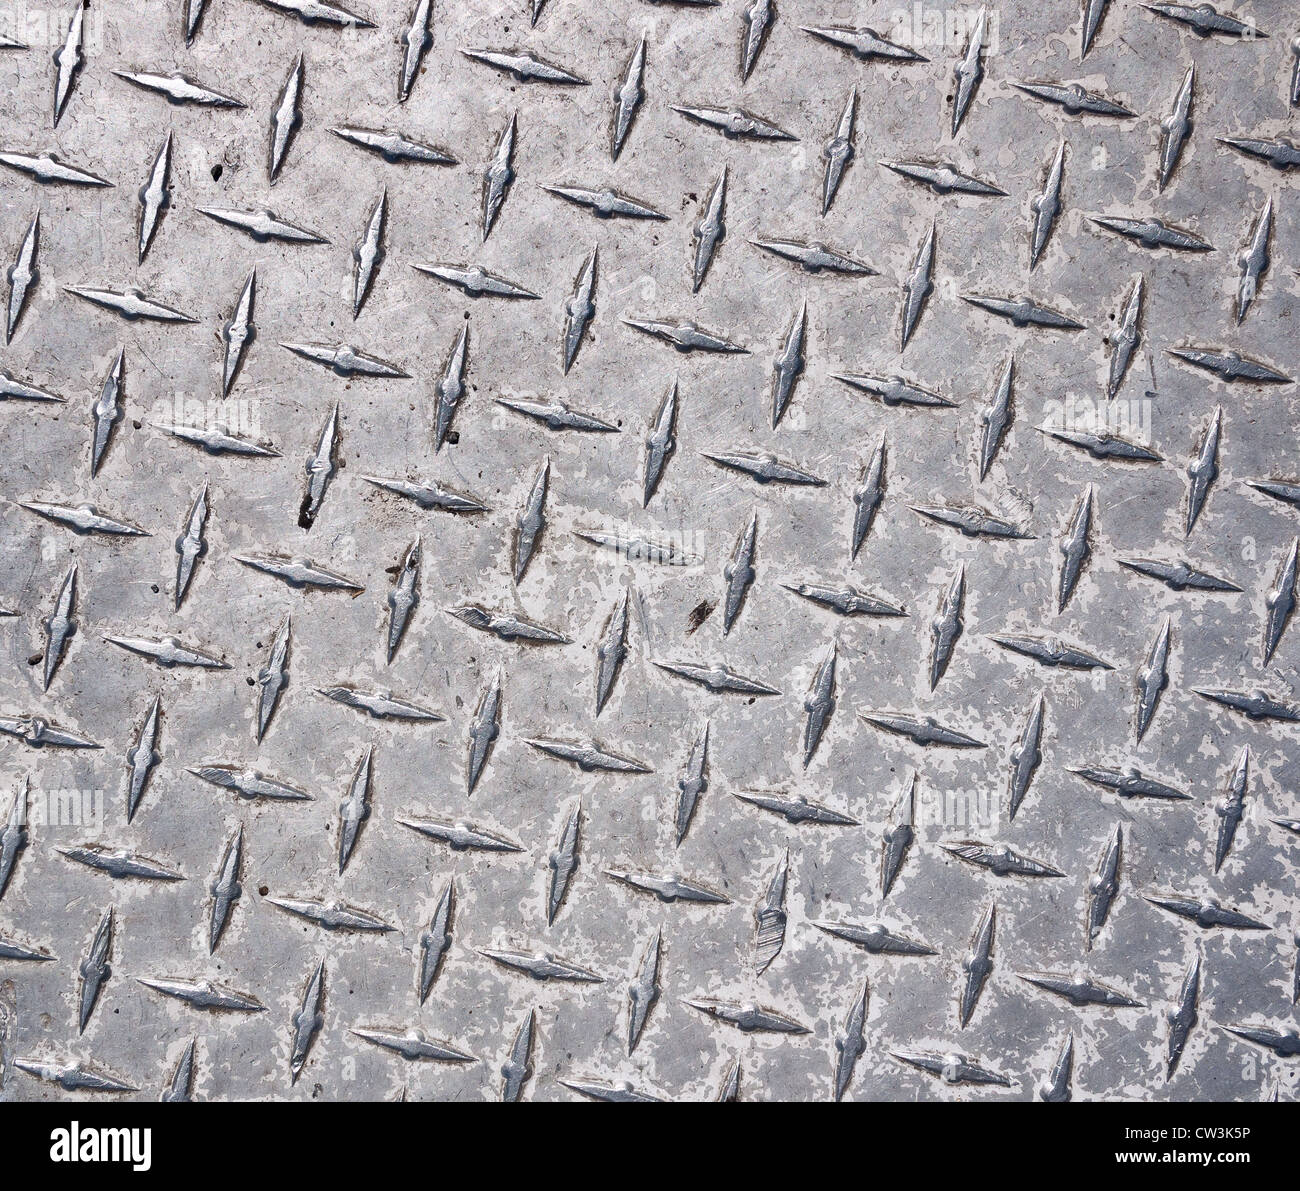 Industrial diamond plate steel Stock Photo